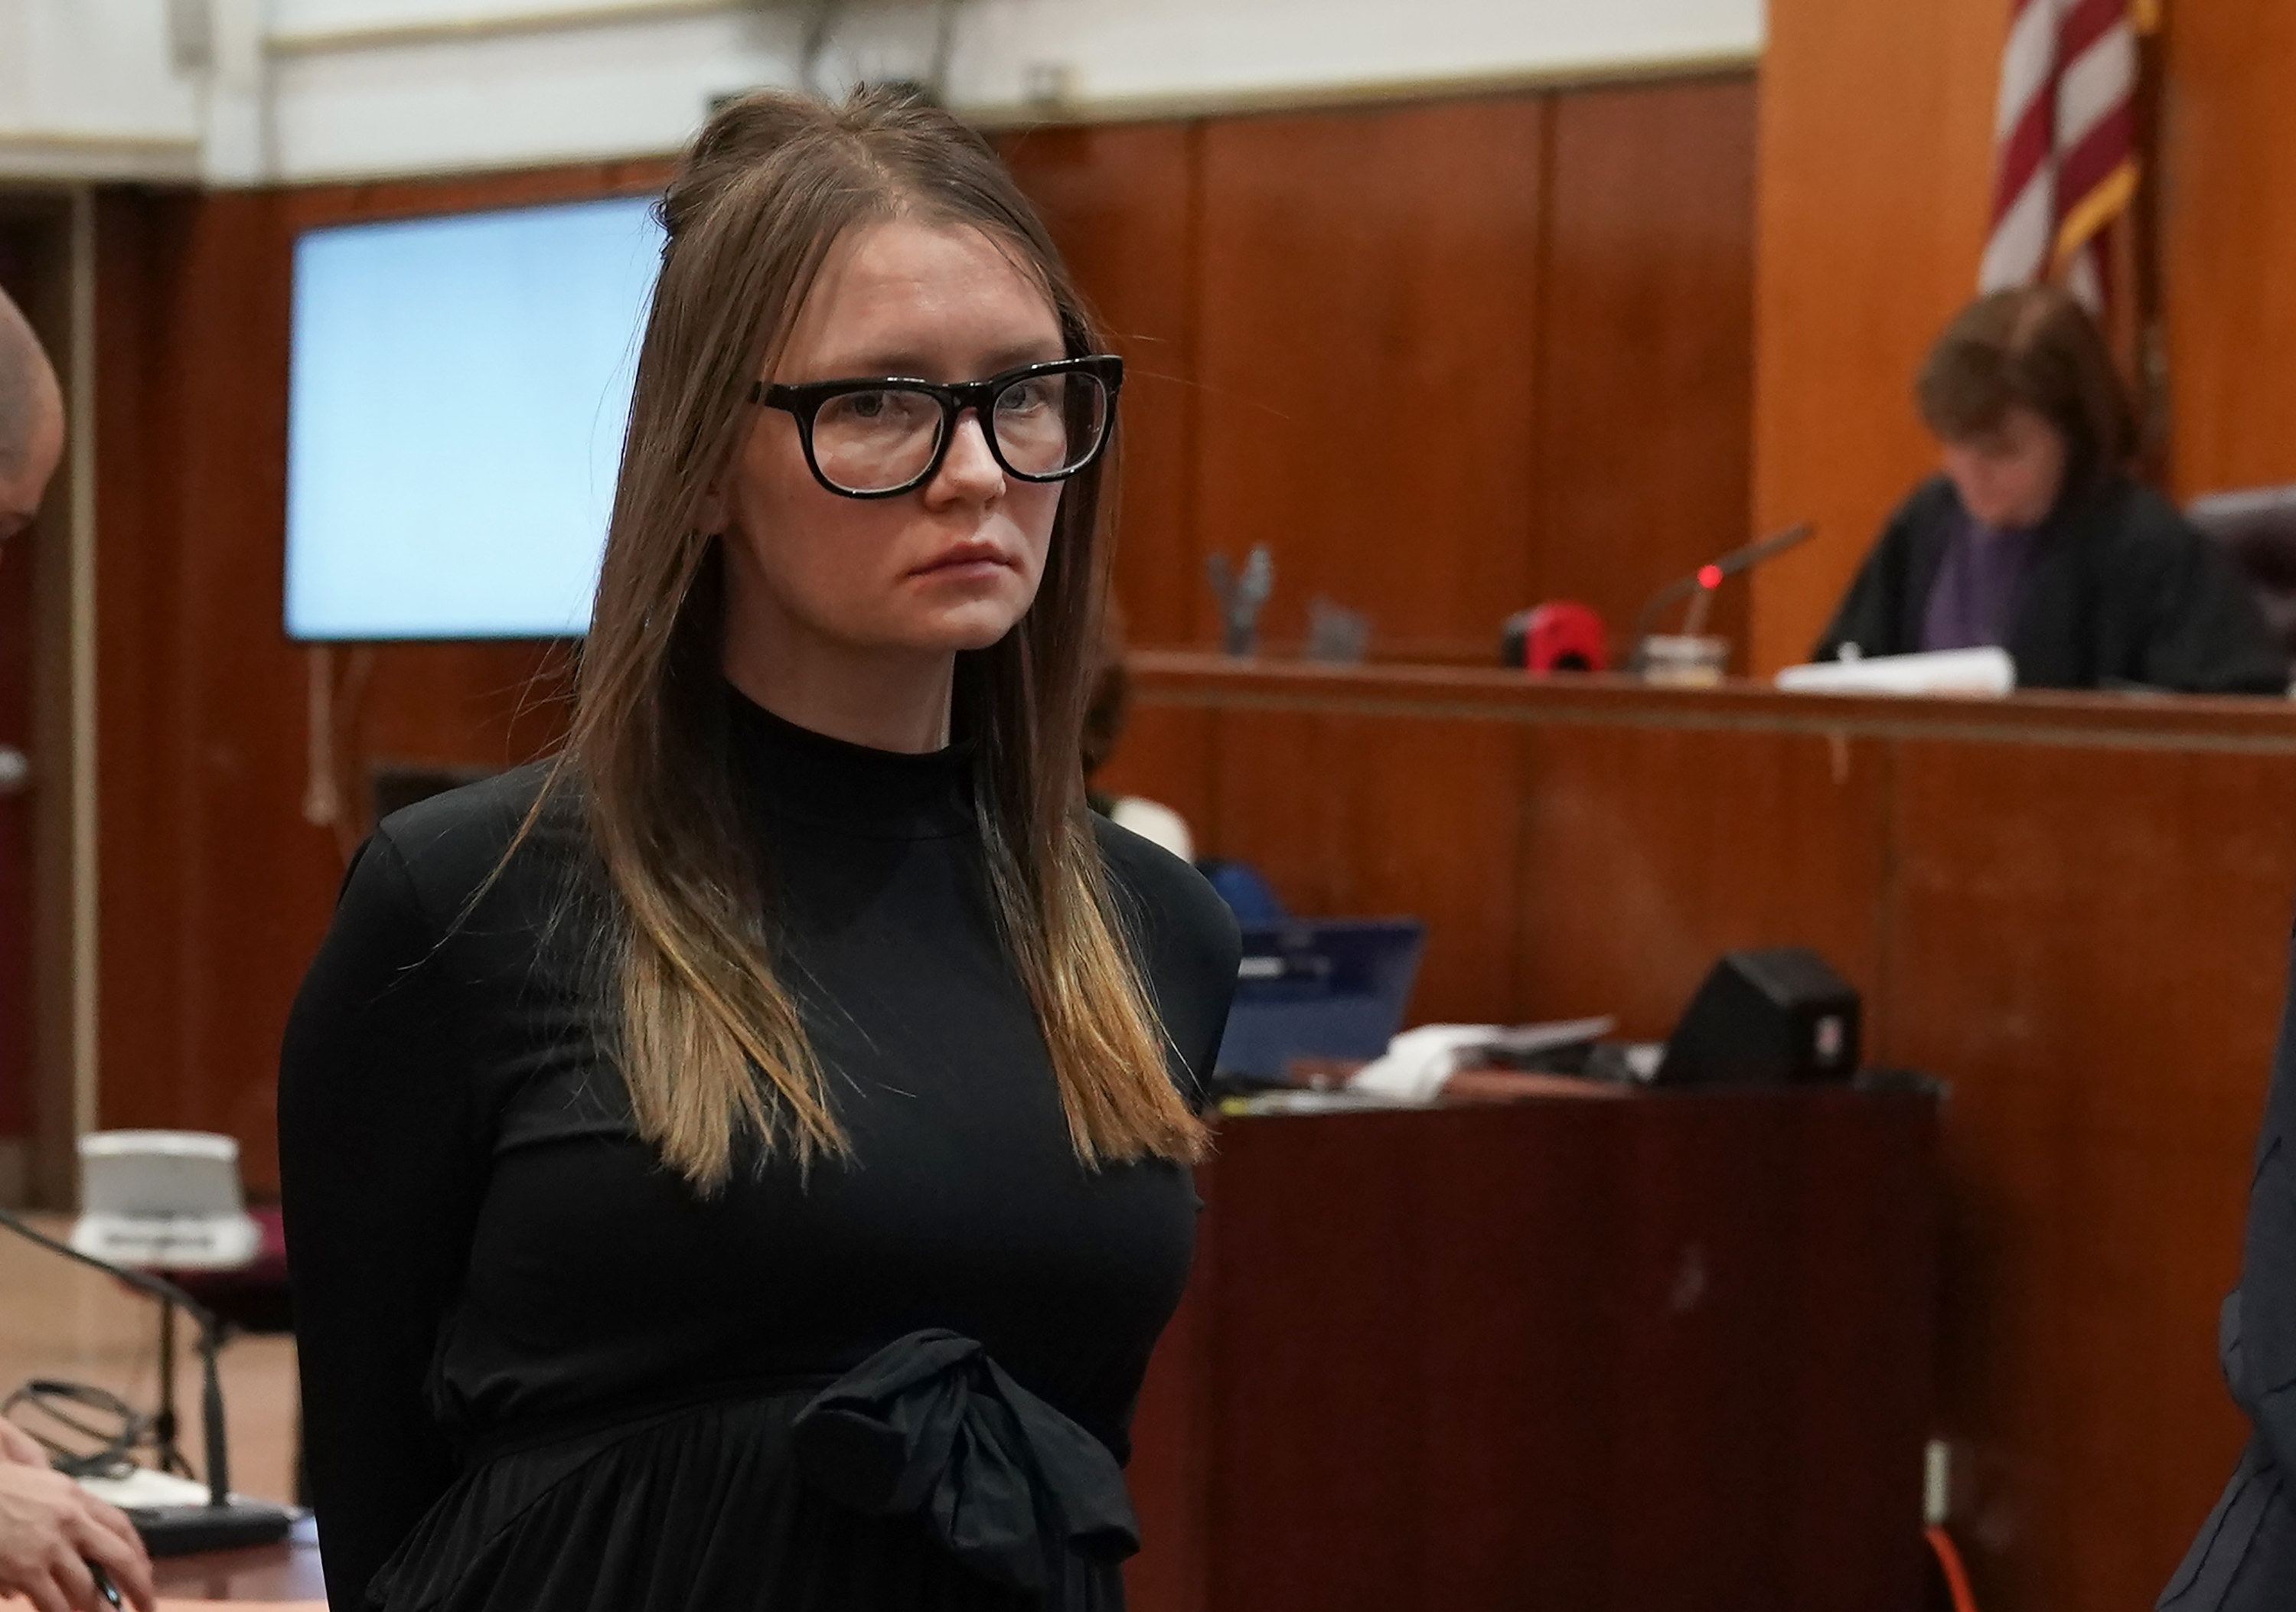 Anna standing in court